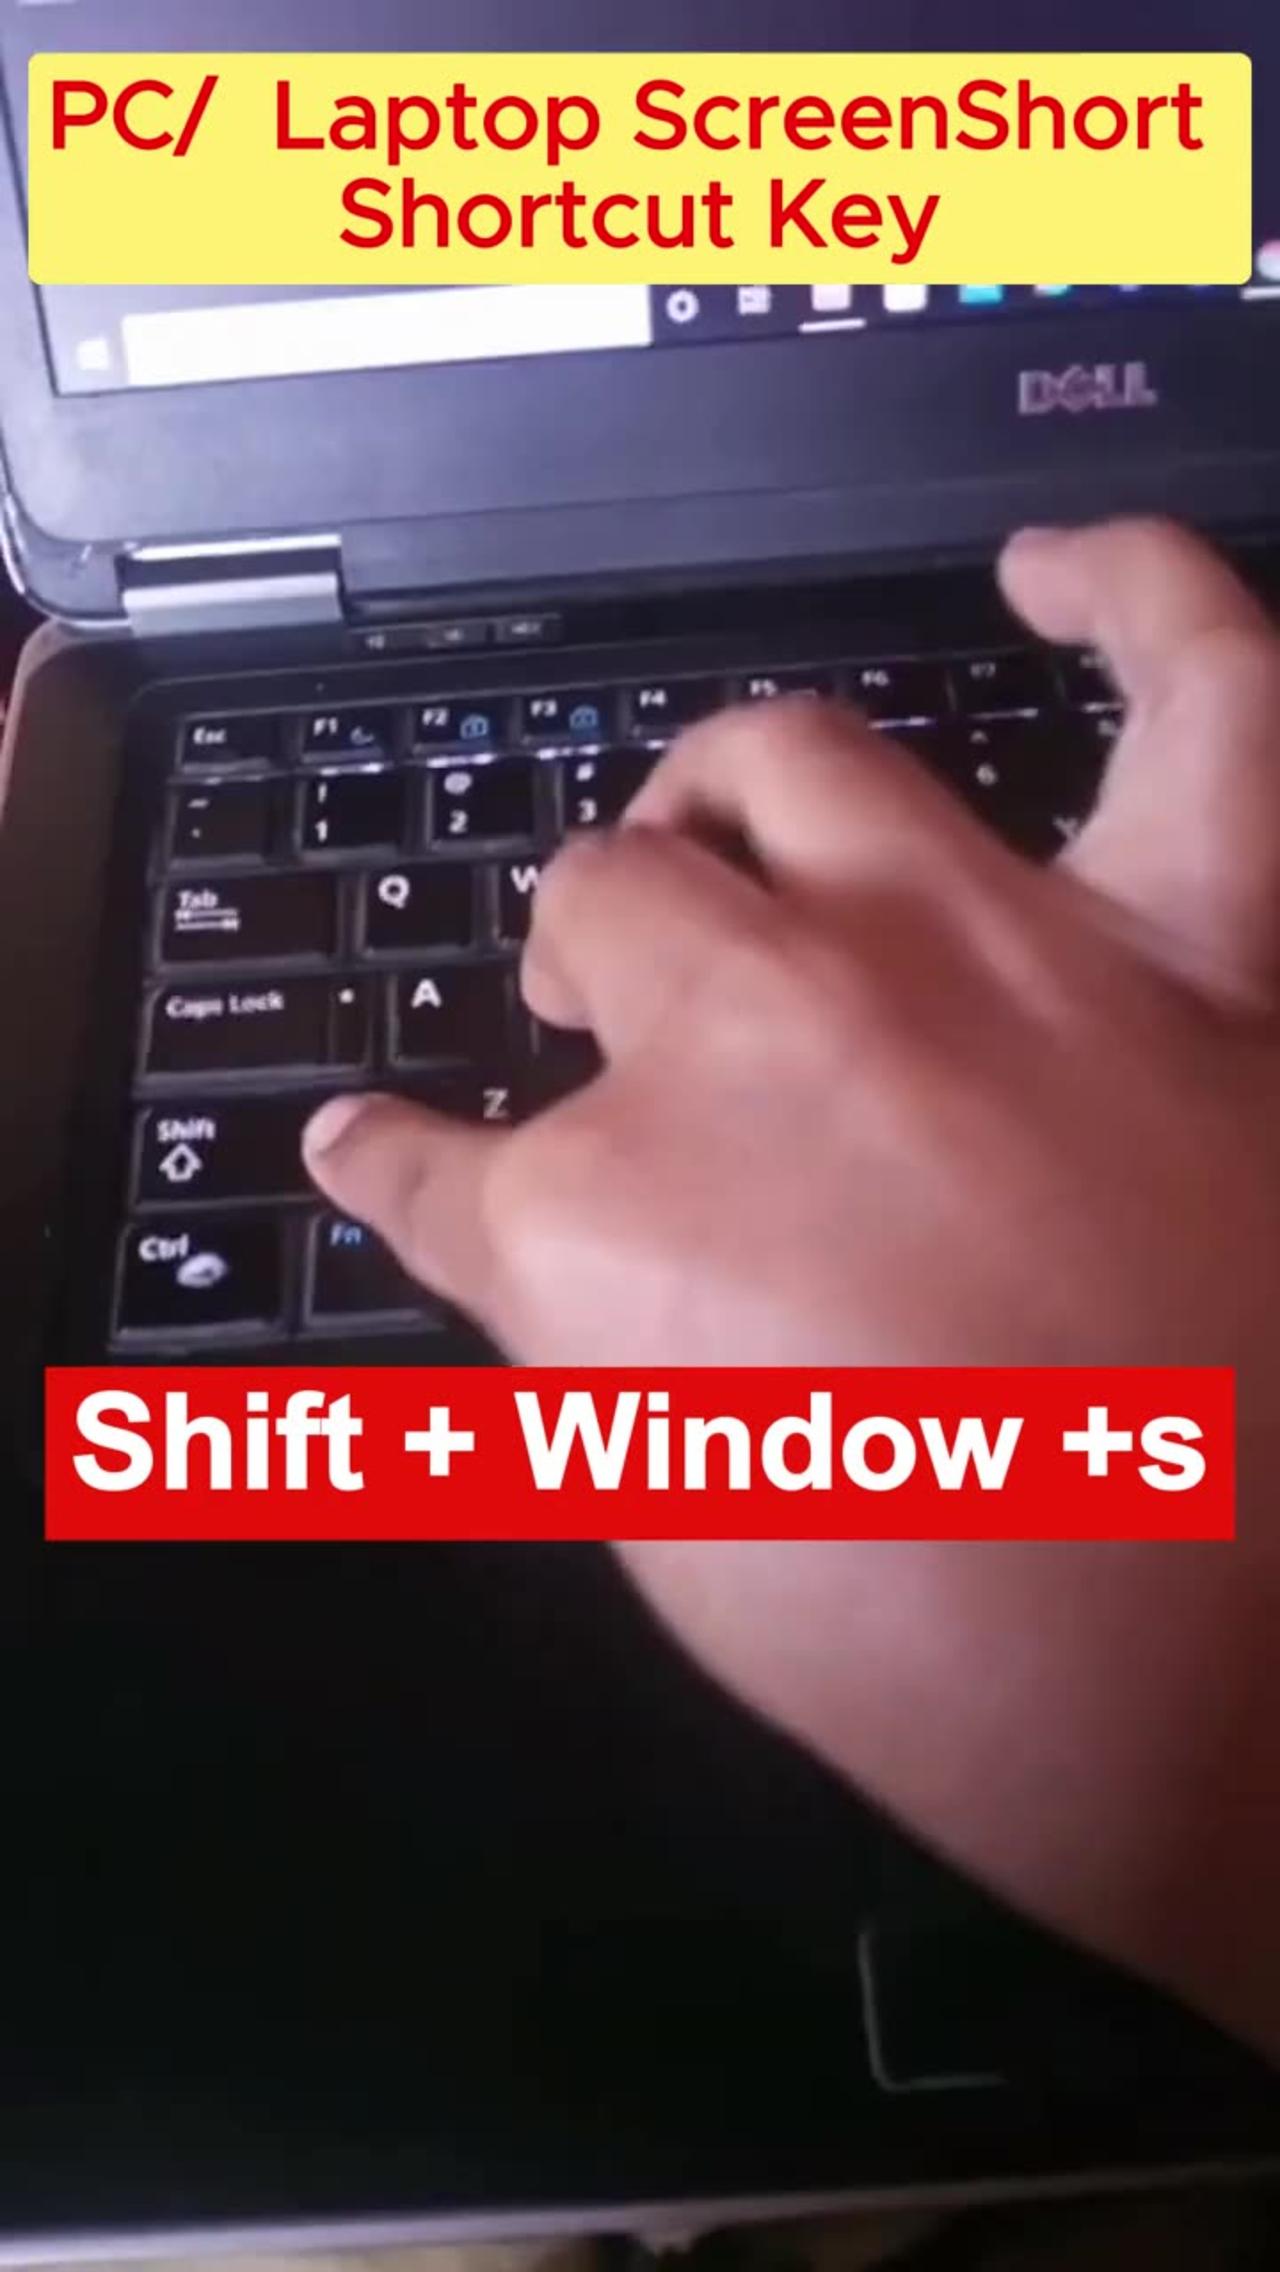 Laptop /pc screenshot shortcut key